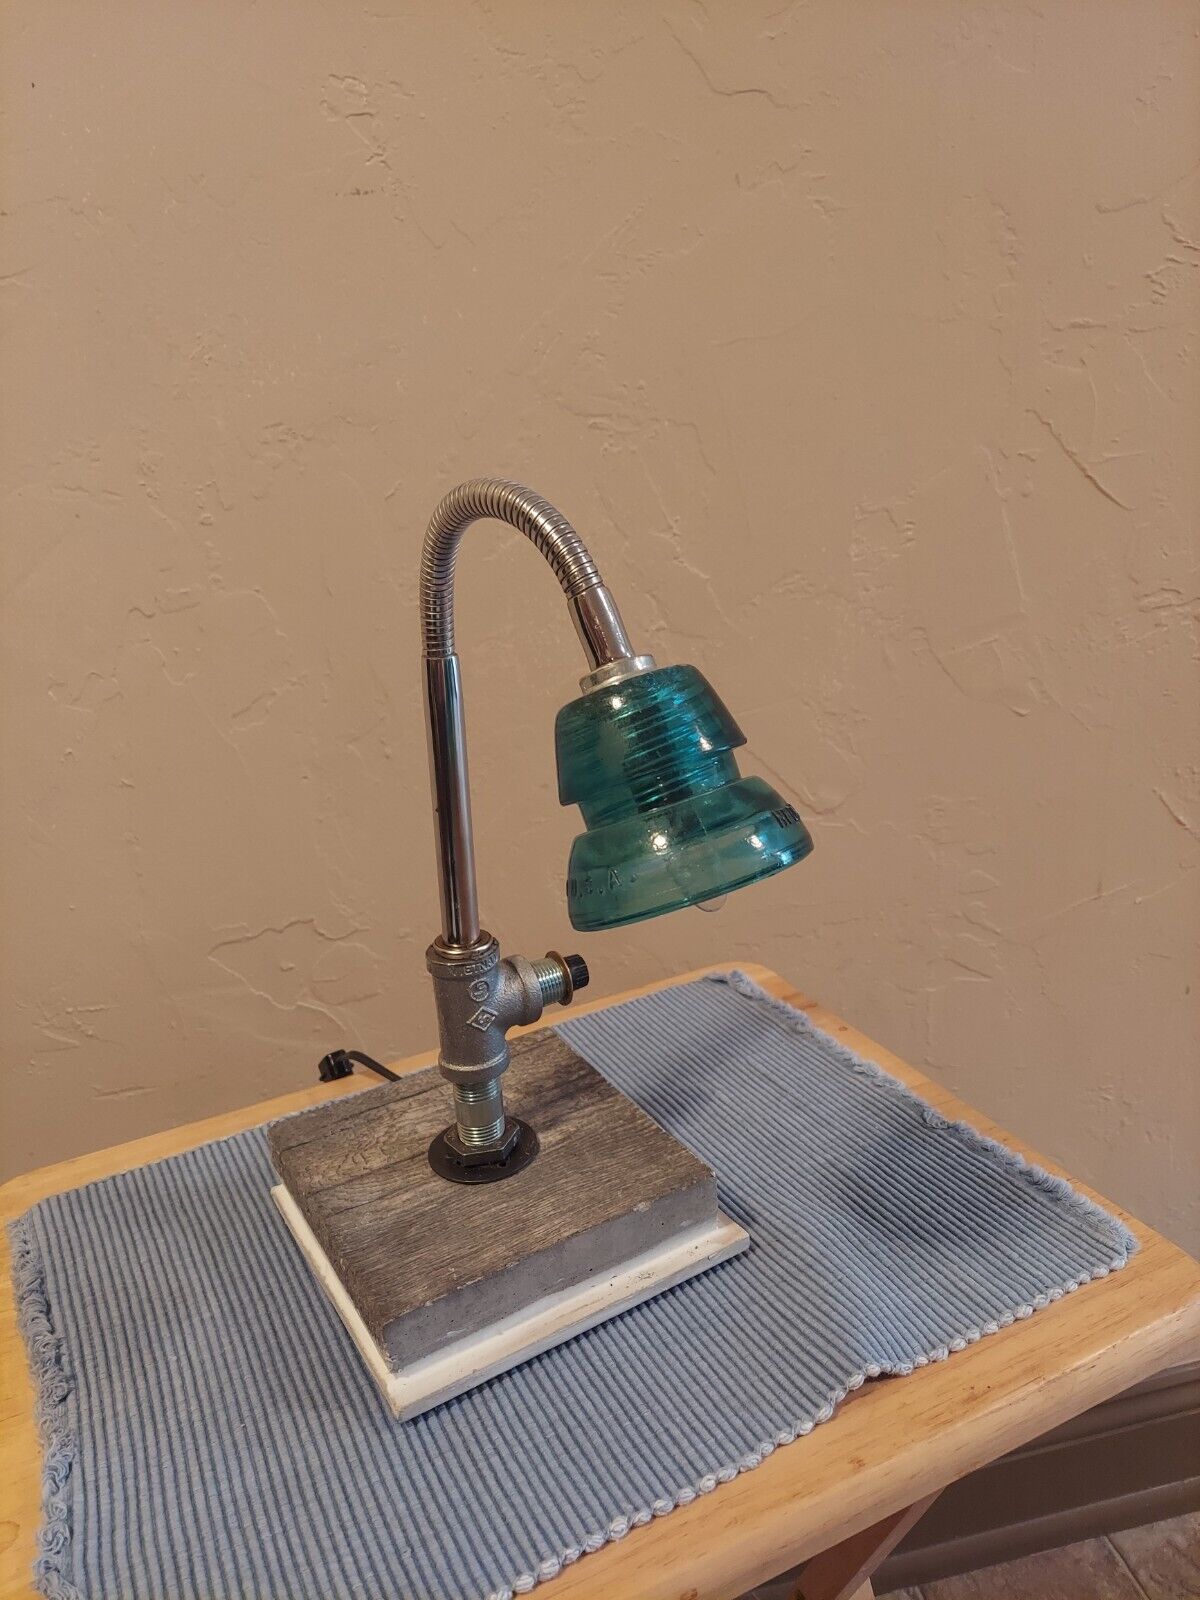  Steampunk Industrial Style Gooseneck Lamp With Hemingray Insulator Shade. 